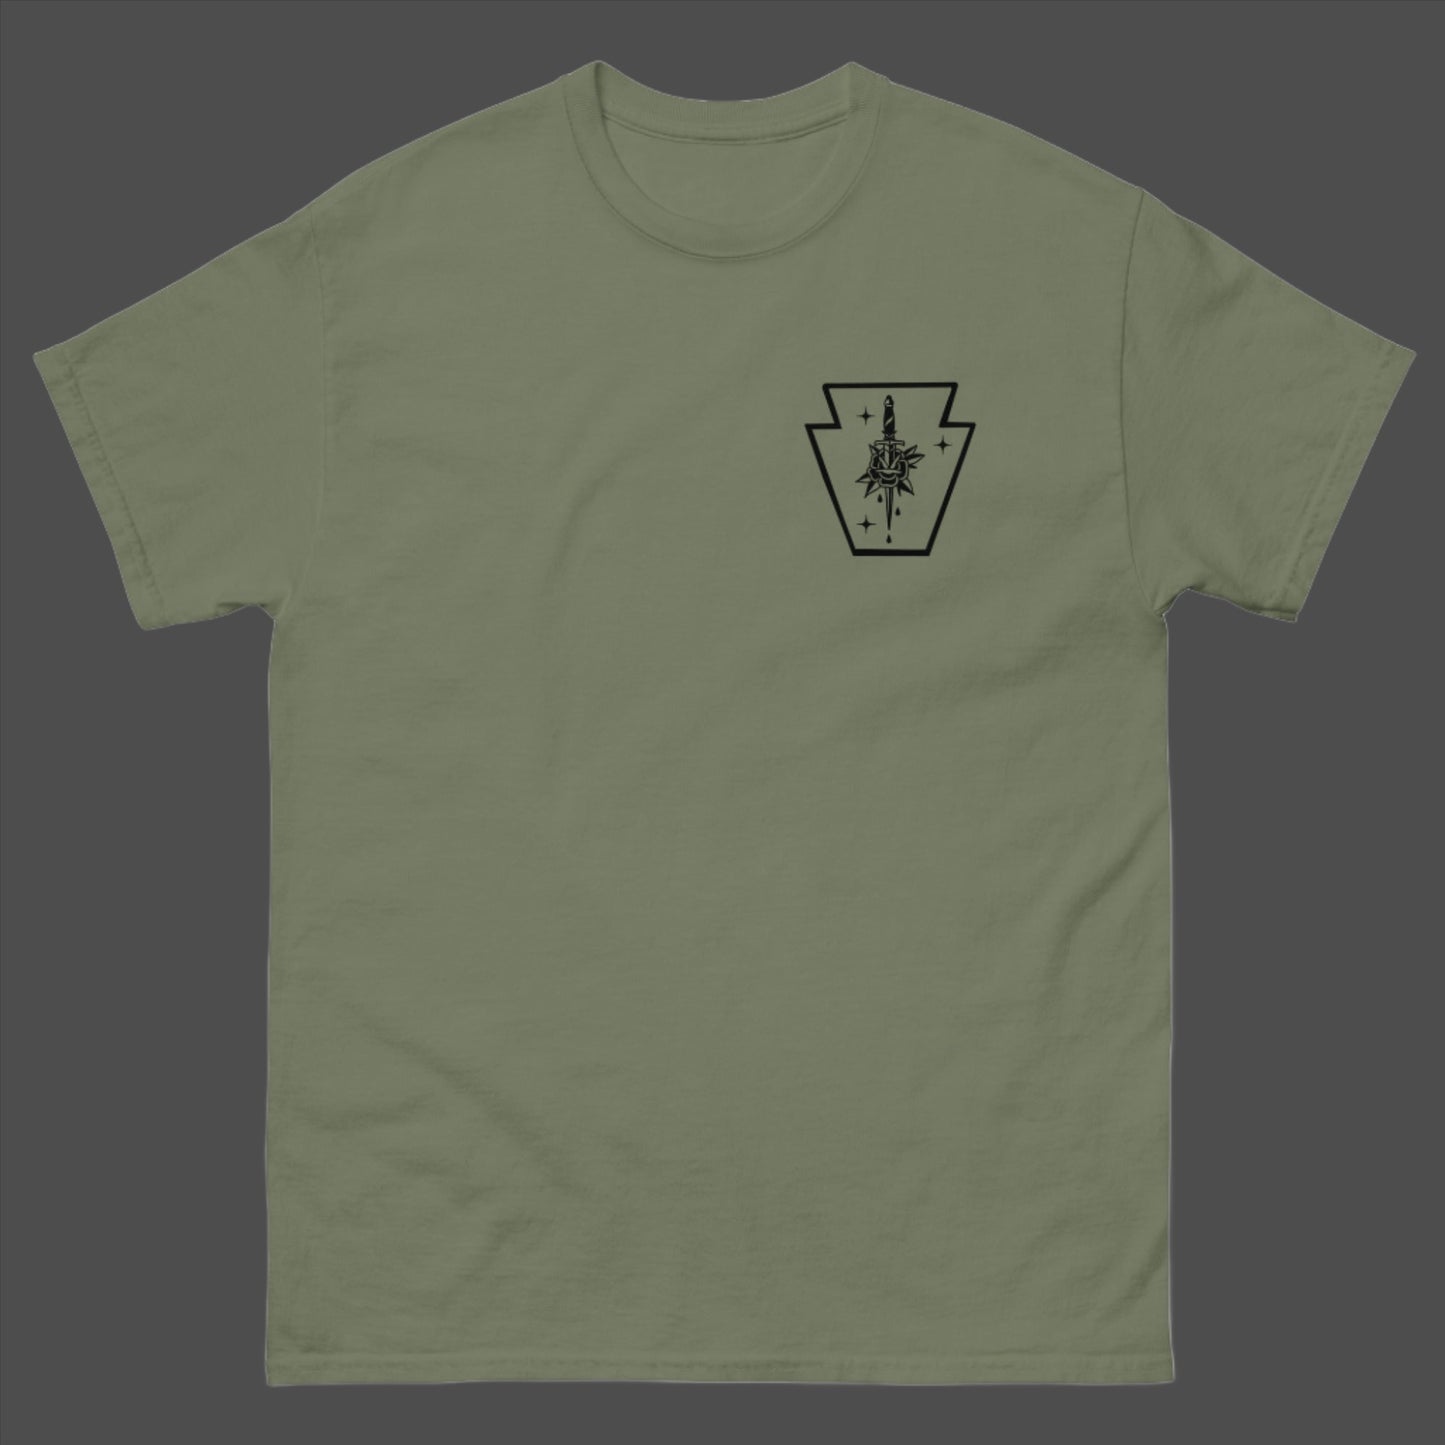 Sooner Than You Think - Army / USMC skivvy shirt